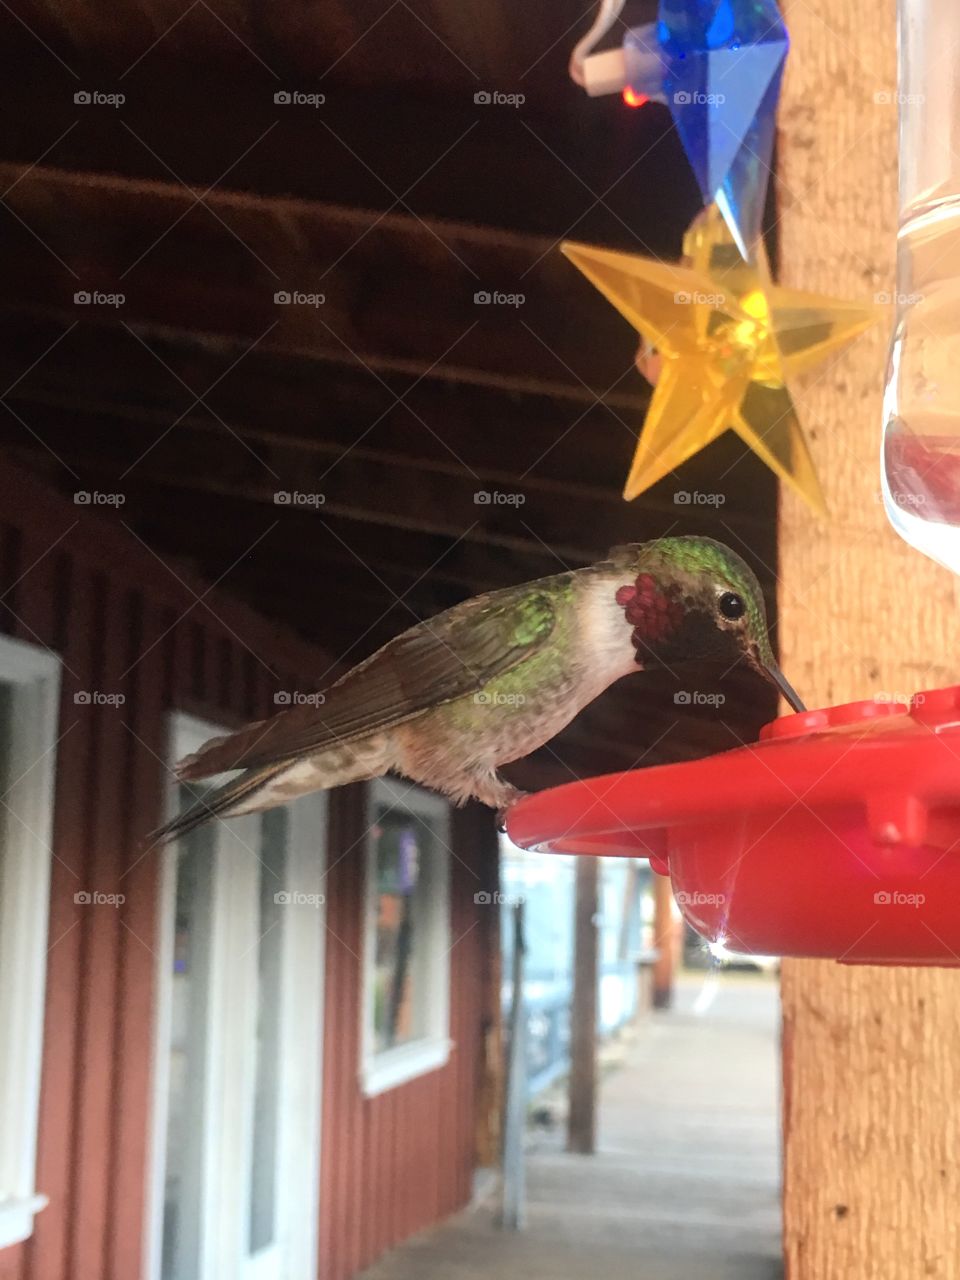 Hummingbird resting & eating on a festive hummingbird feeder.